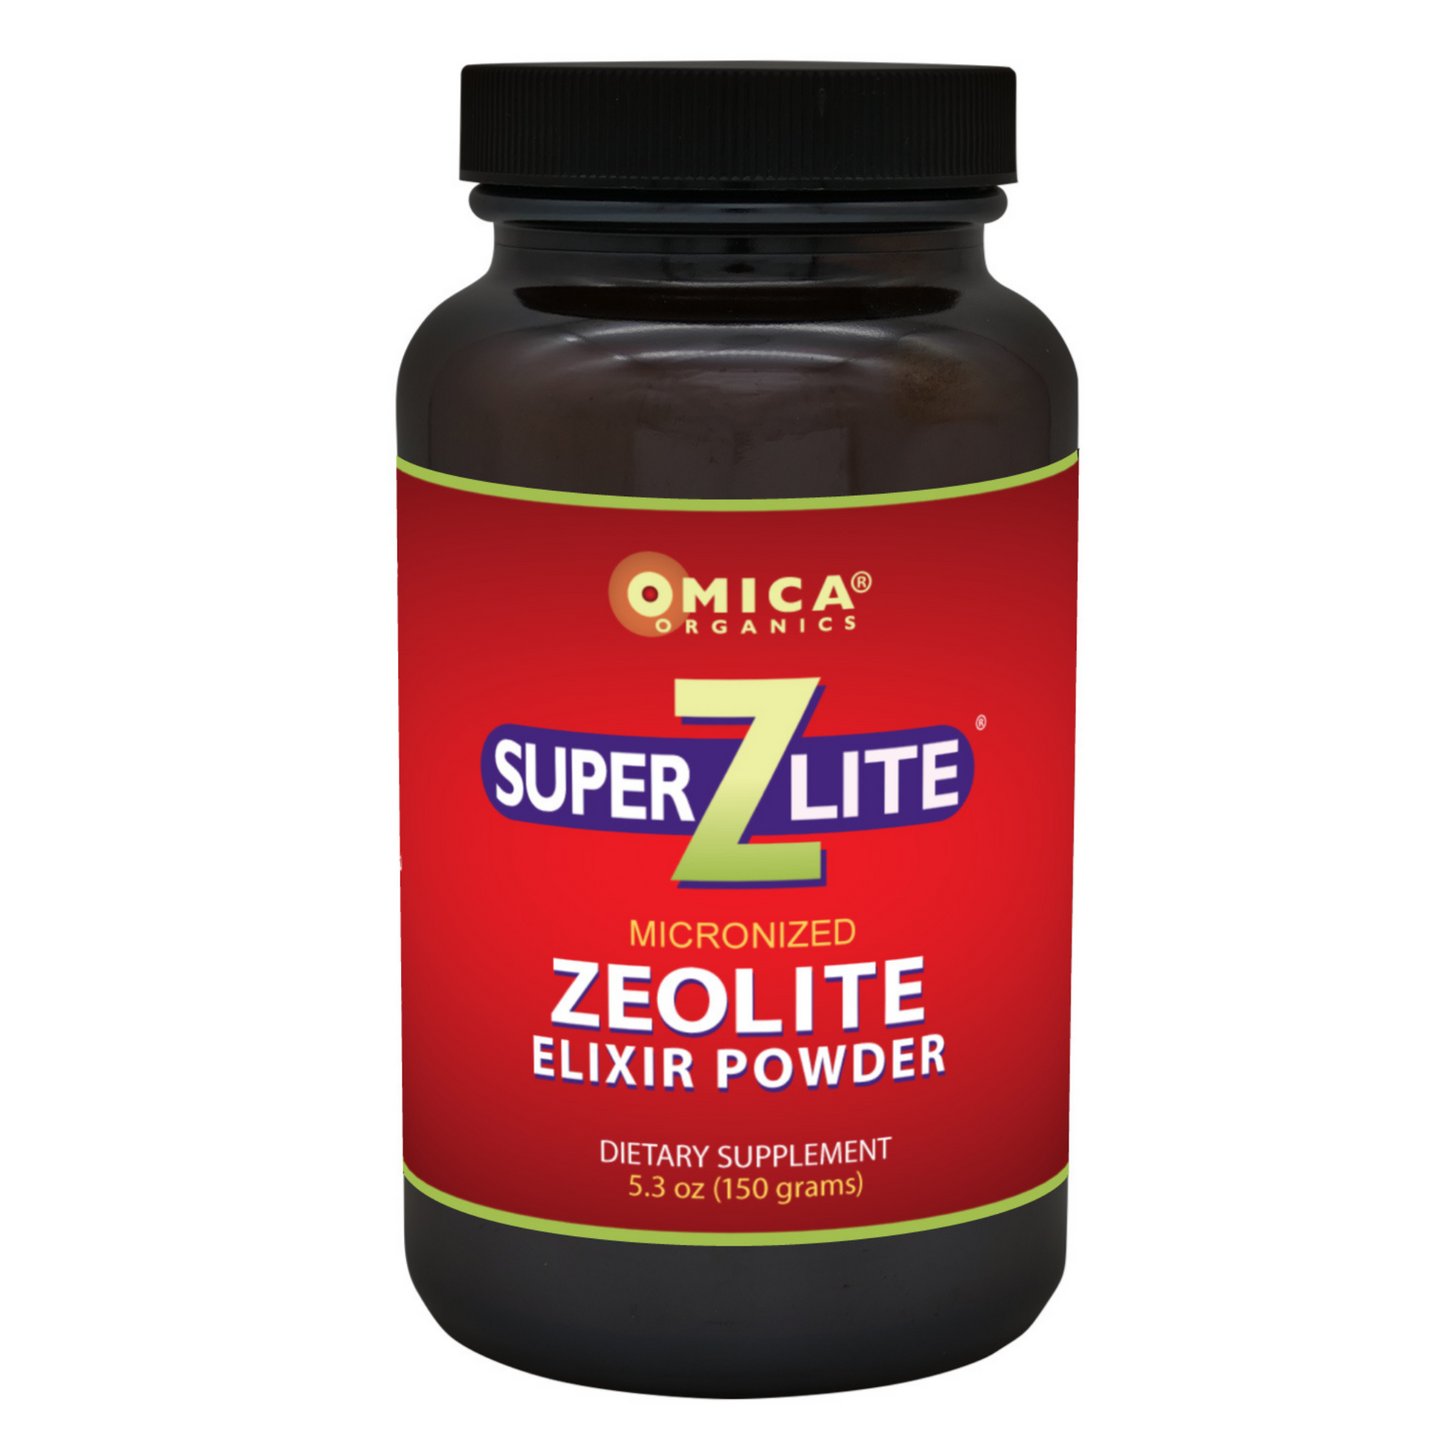 Primary Image of Zeolite Elixir Powder (5.3 oz)